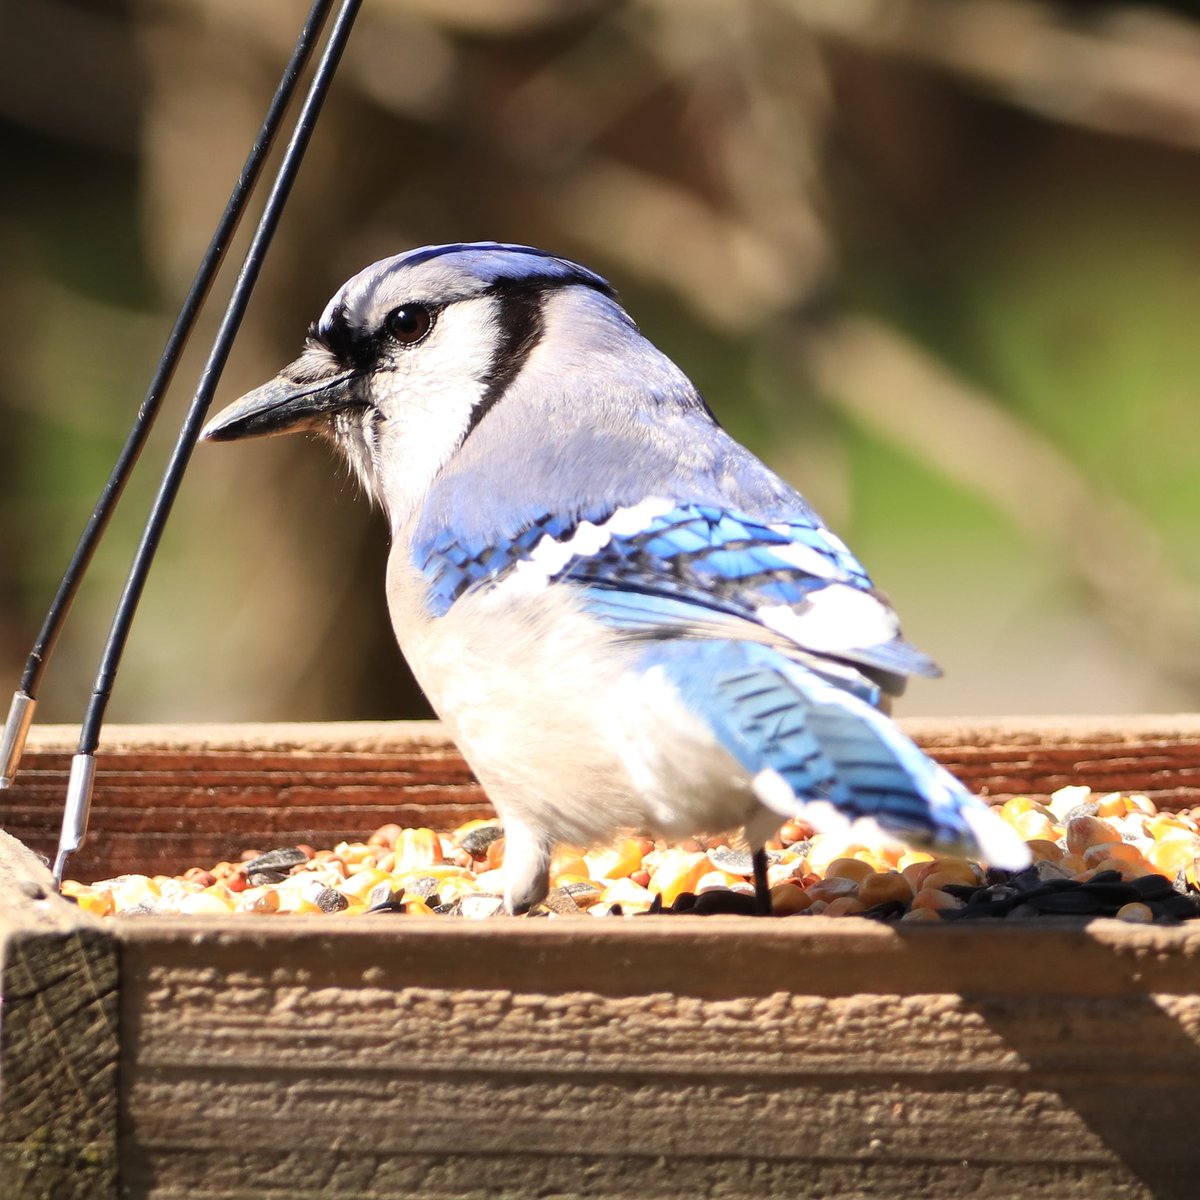 What a lovely pose from this beautiful blue jay!
#bluejaybird #bluejays #bluejay #poses #pose #ohiobirdworld #birdwatchers #birdwatchersdaily #birdwatcher #birdloversdaily #backyardbirding #ohiobirds #birdlove #birdlovers #birdlife